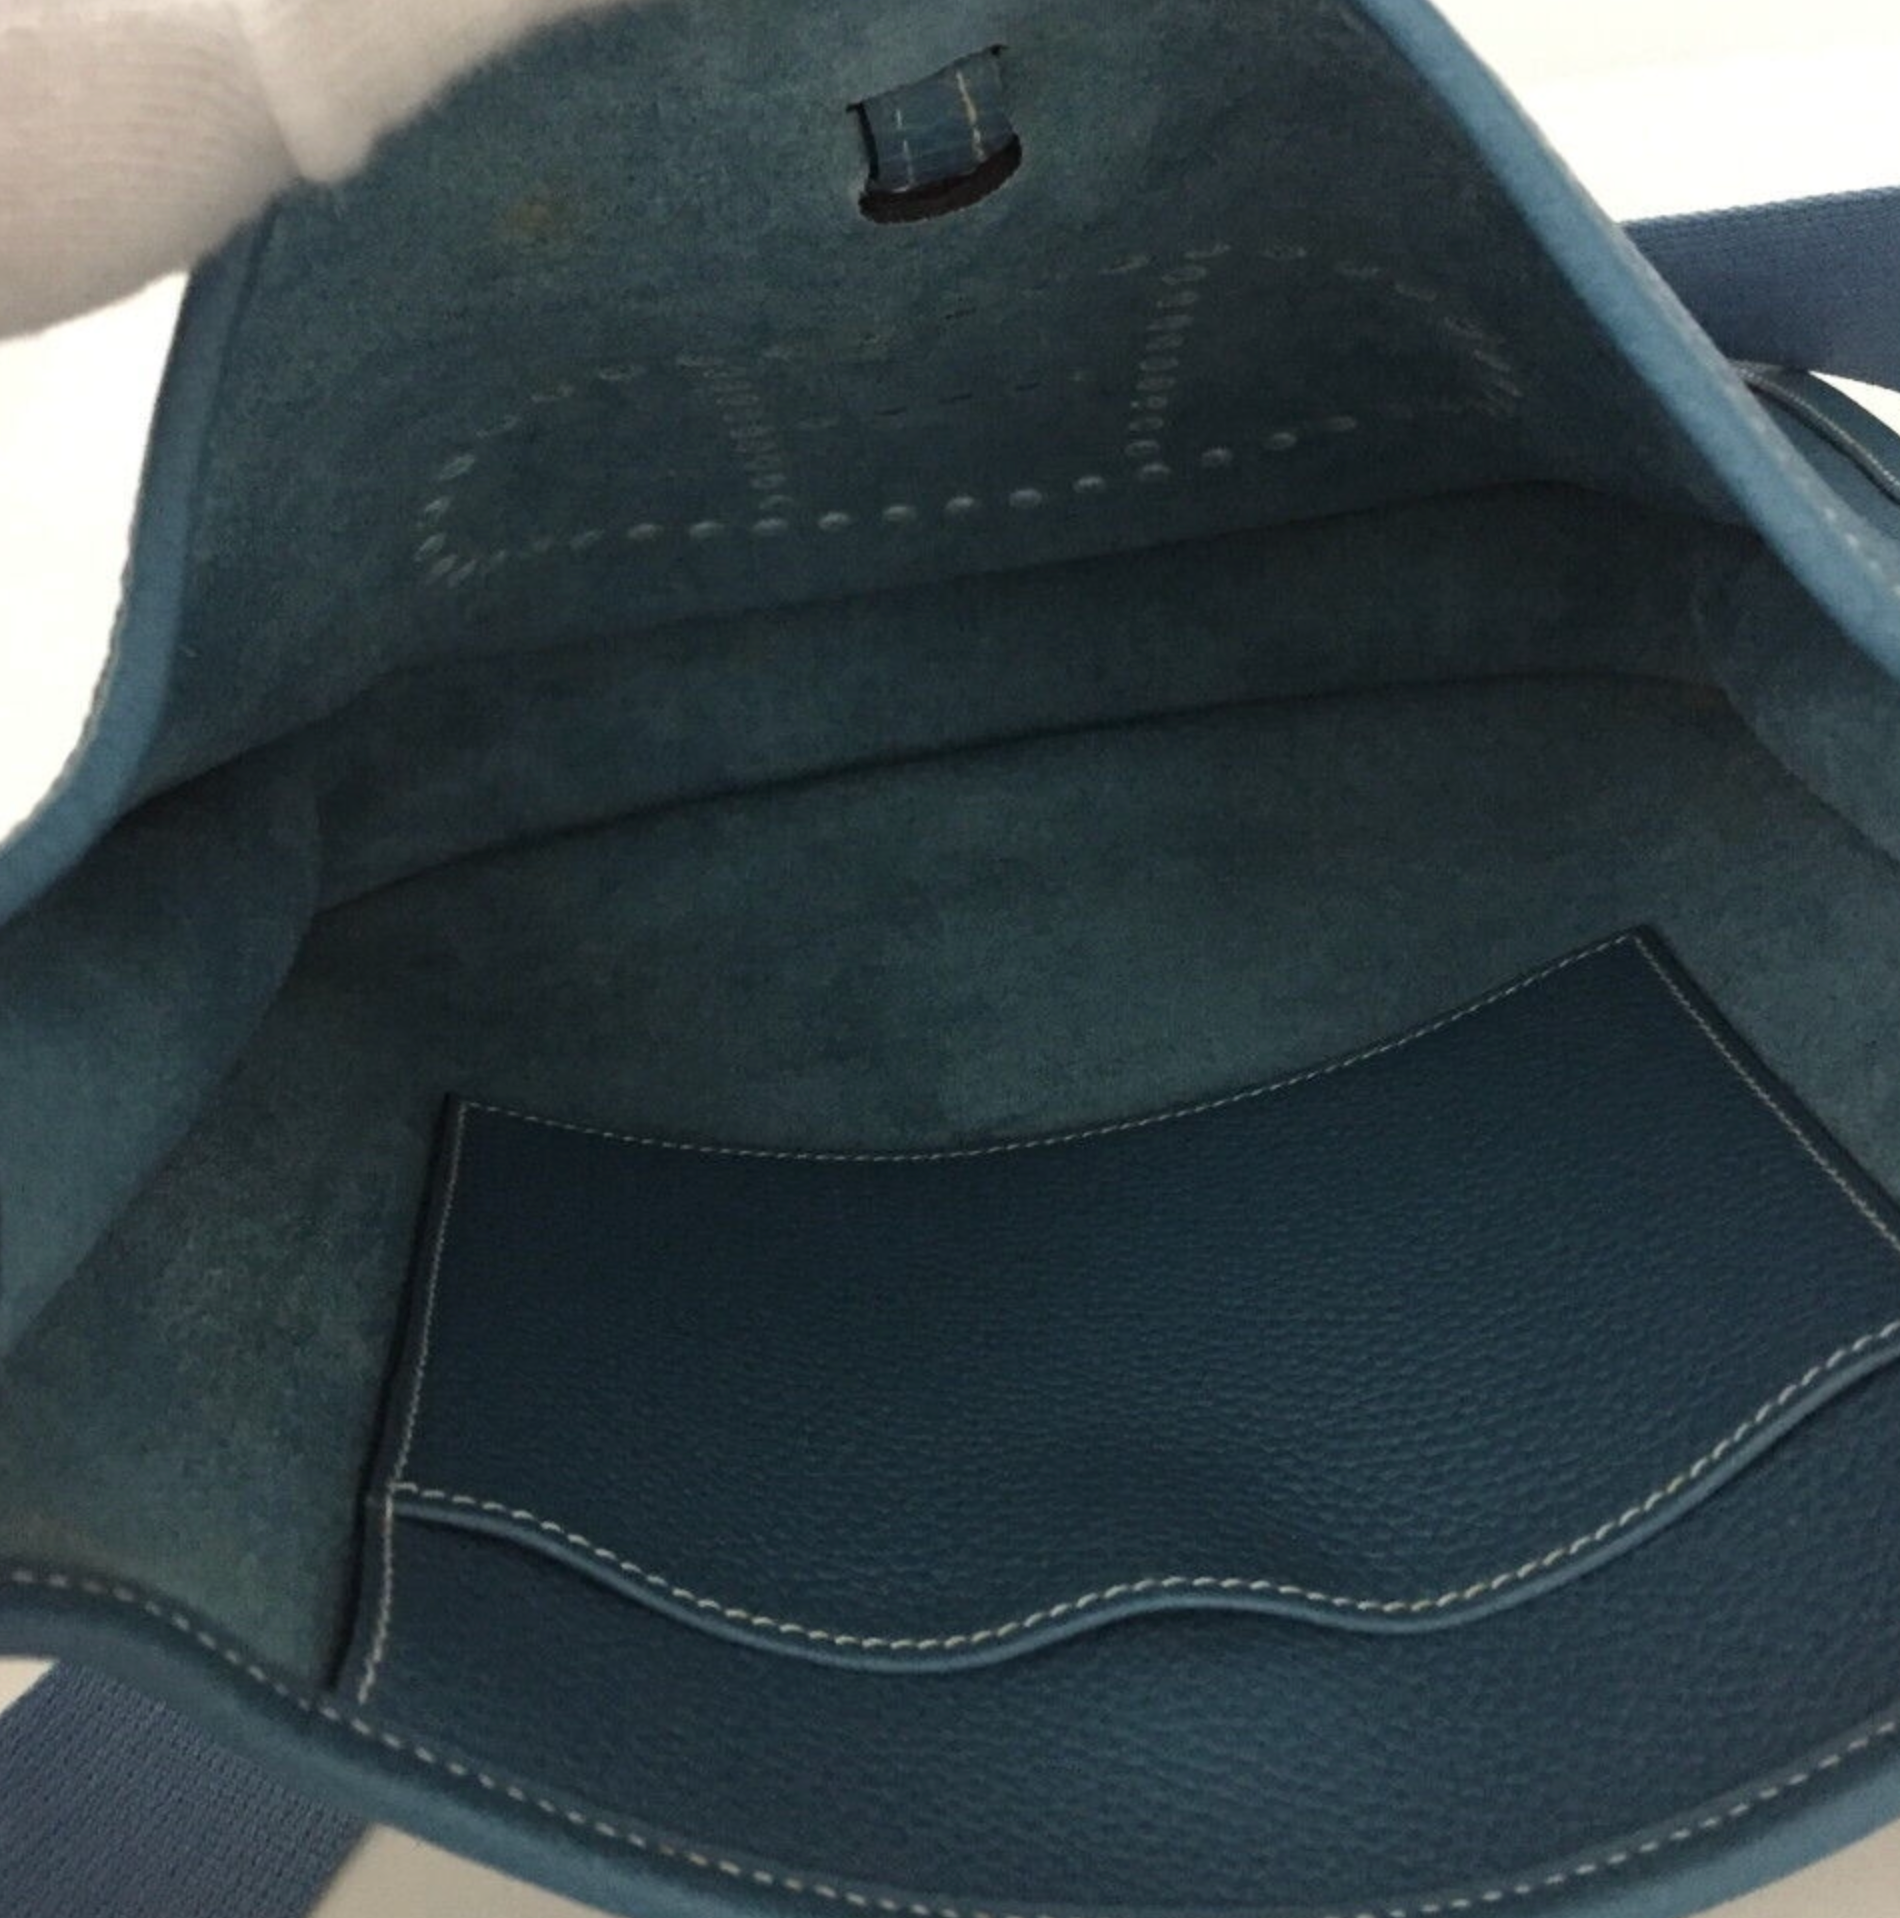 Handbag for Women, GMYLE Embossed Pattern PU Leather Shoulder